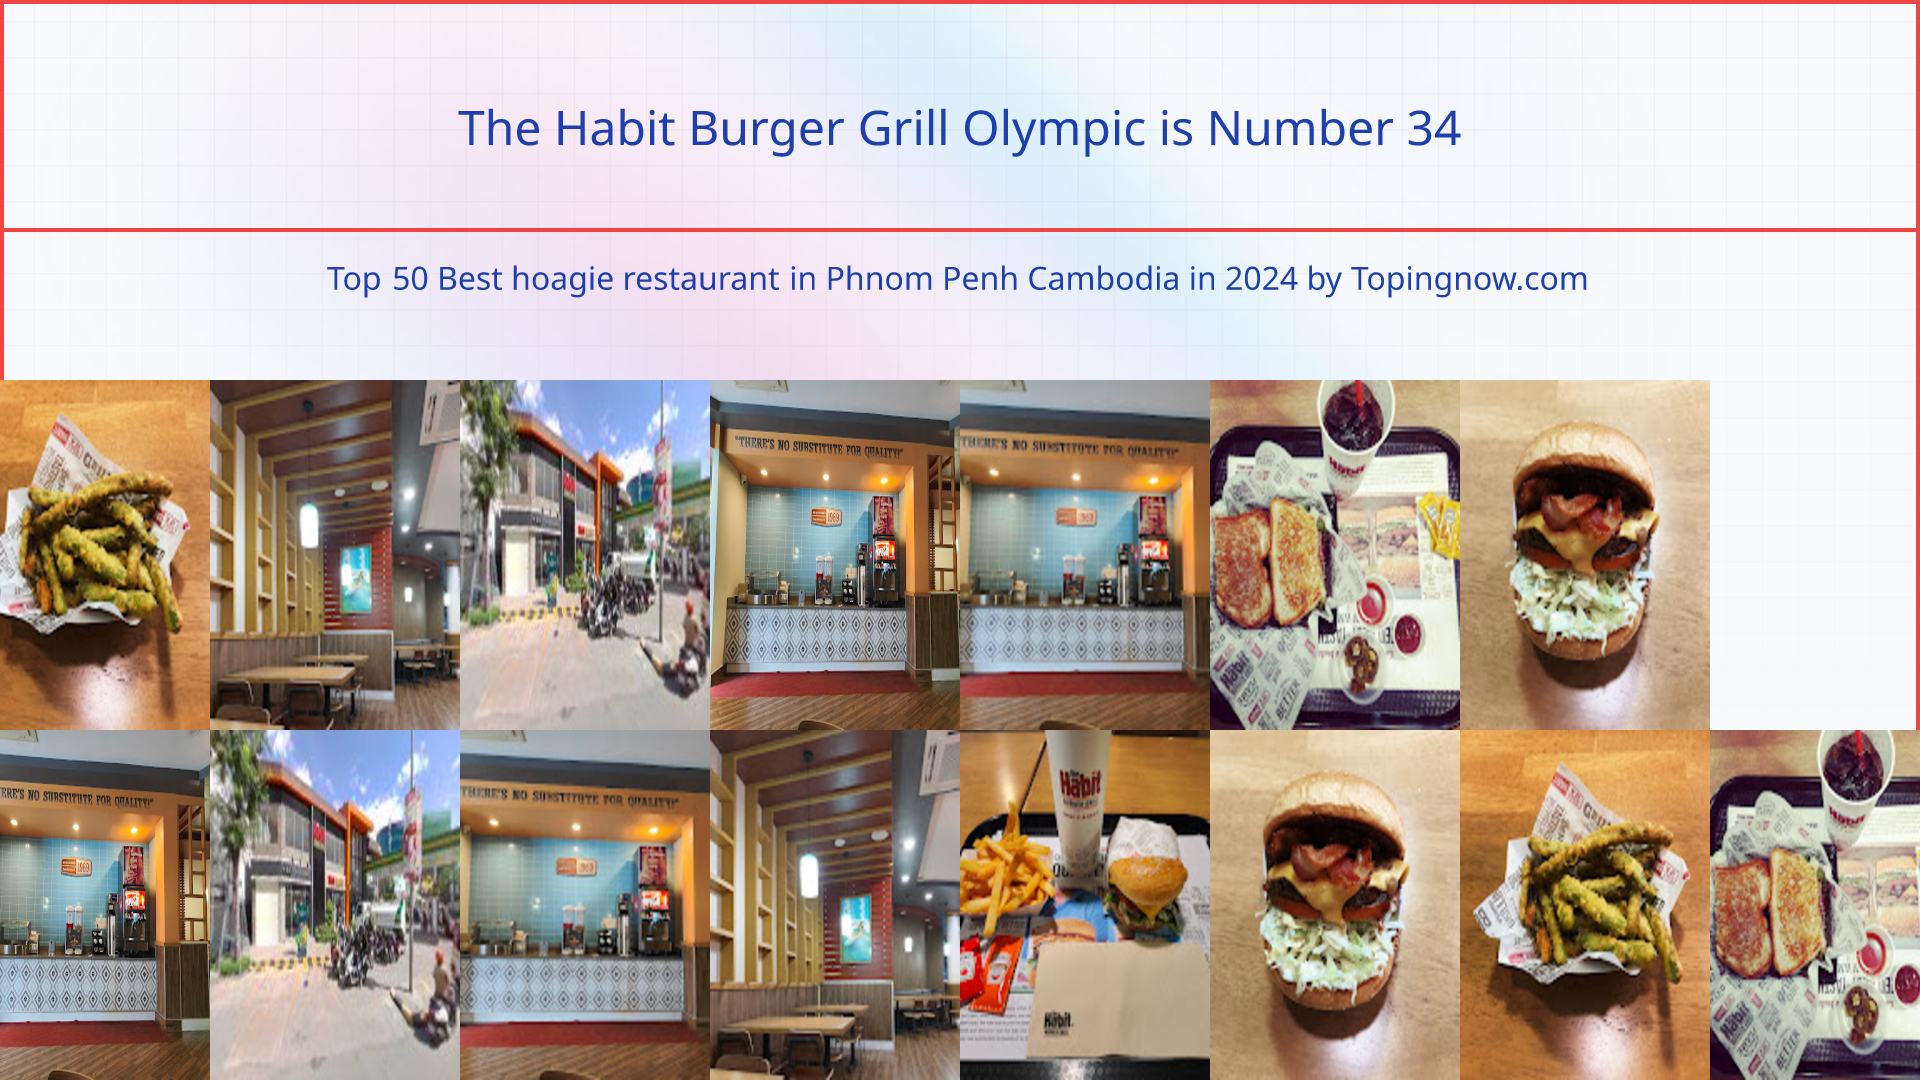 The Habit Burger Grill Olympic: Top 50 Best hoagie restaurant in Phnom Penh Cambodia in 2024